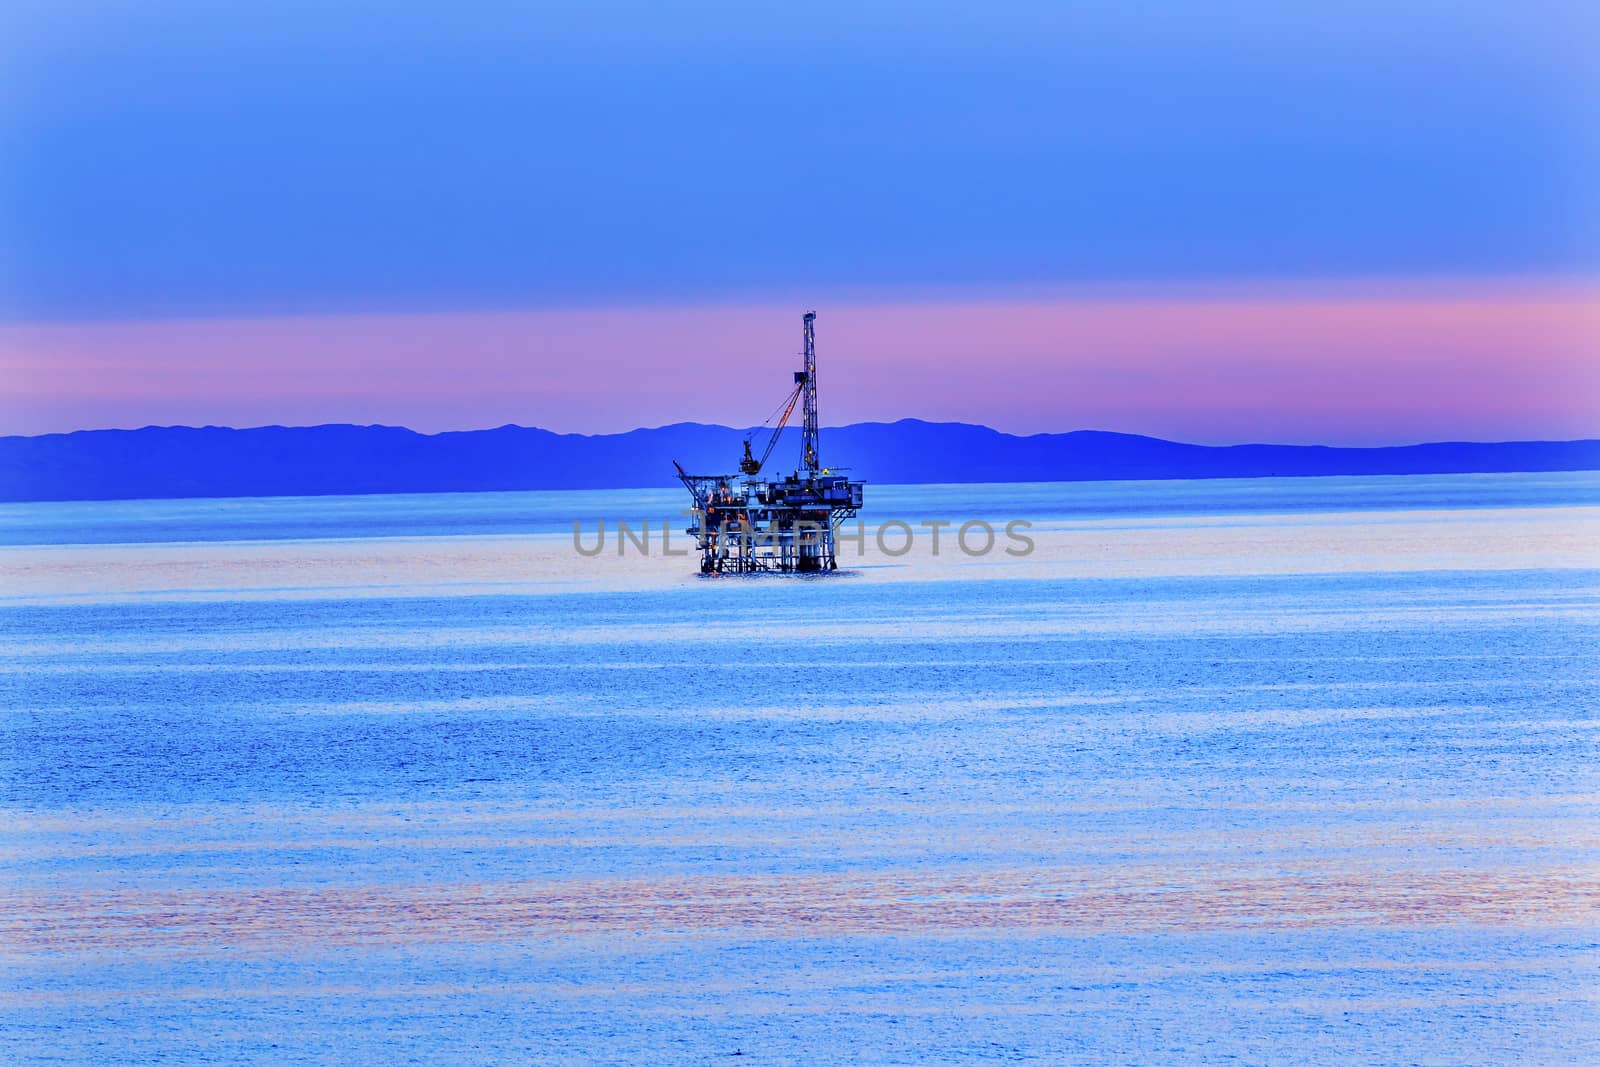 Ellwood Oil Well Offshore Platforms Coastline Pacific Oecan Pink Sunset Goleta California 